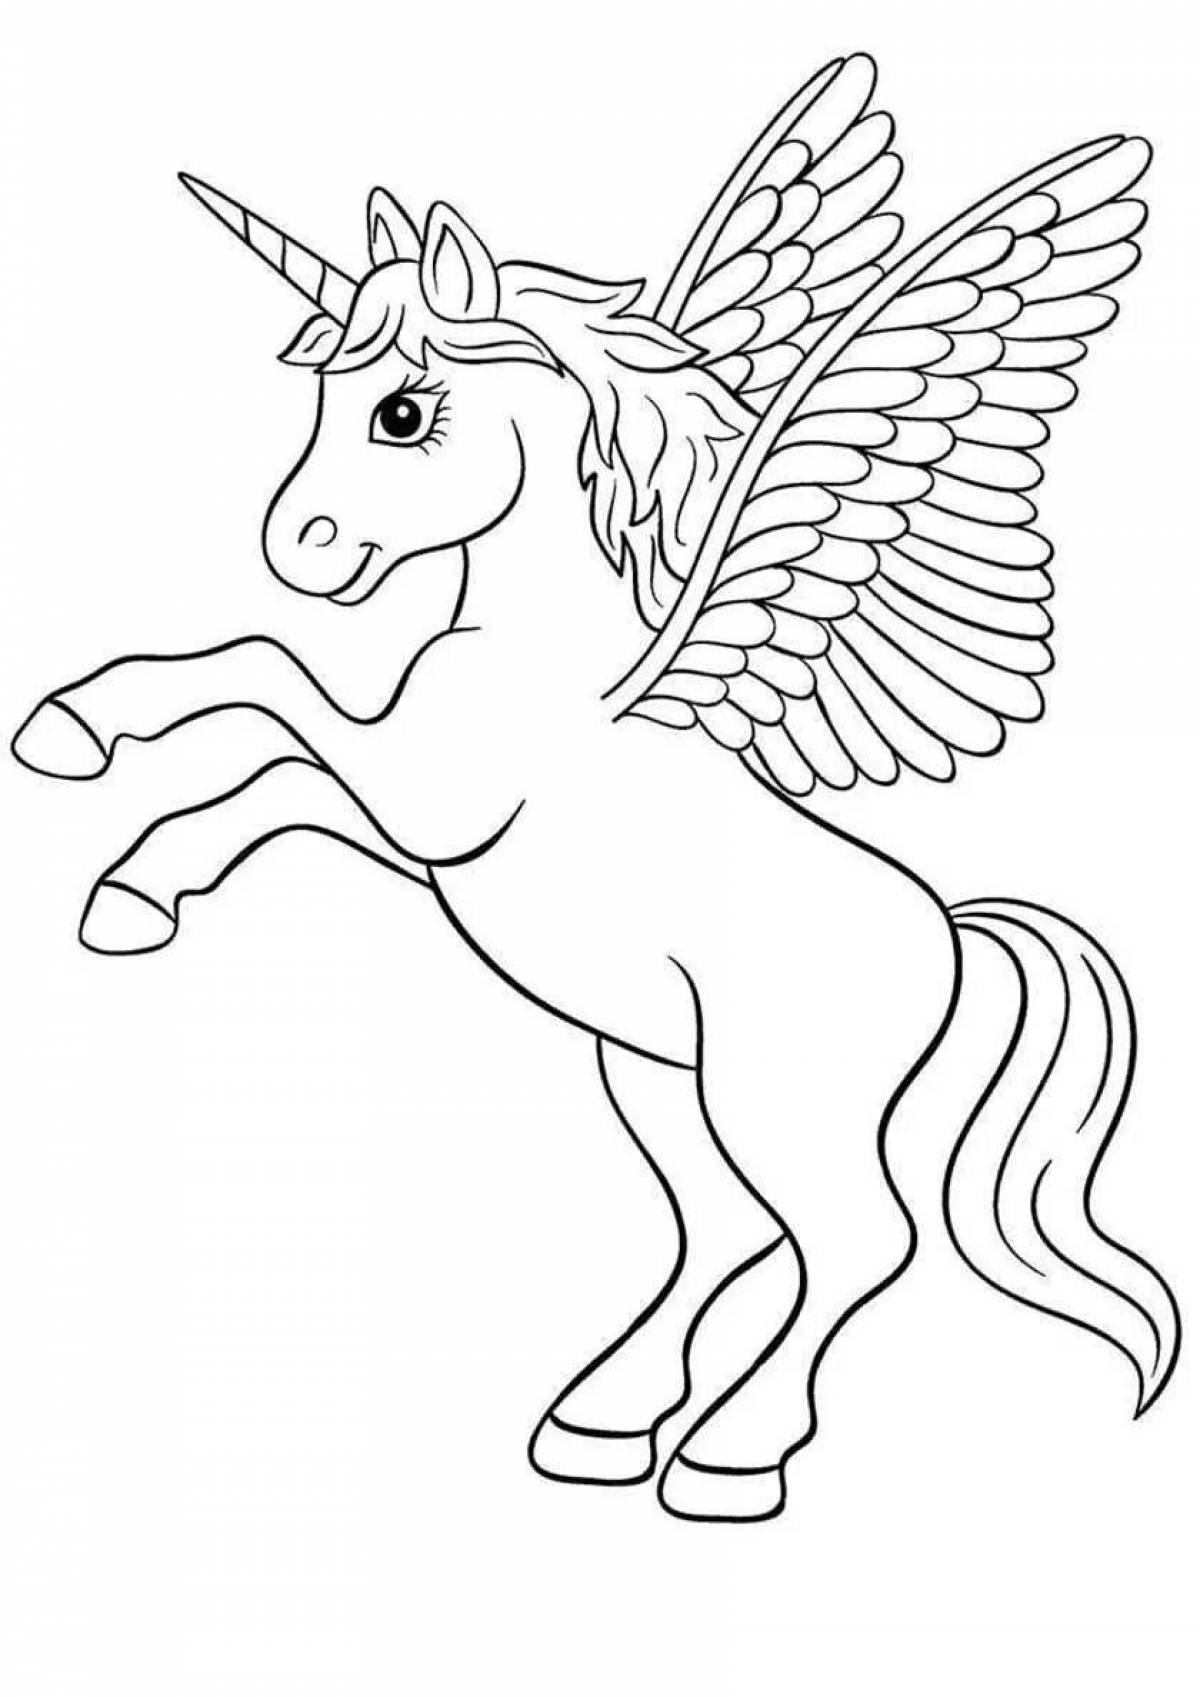 Joyful unicorn drawing for kids